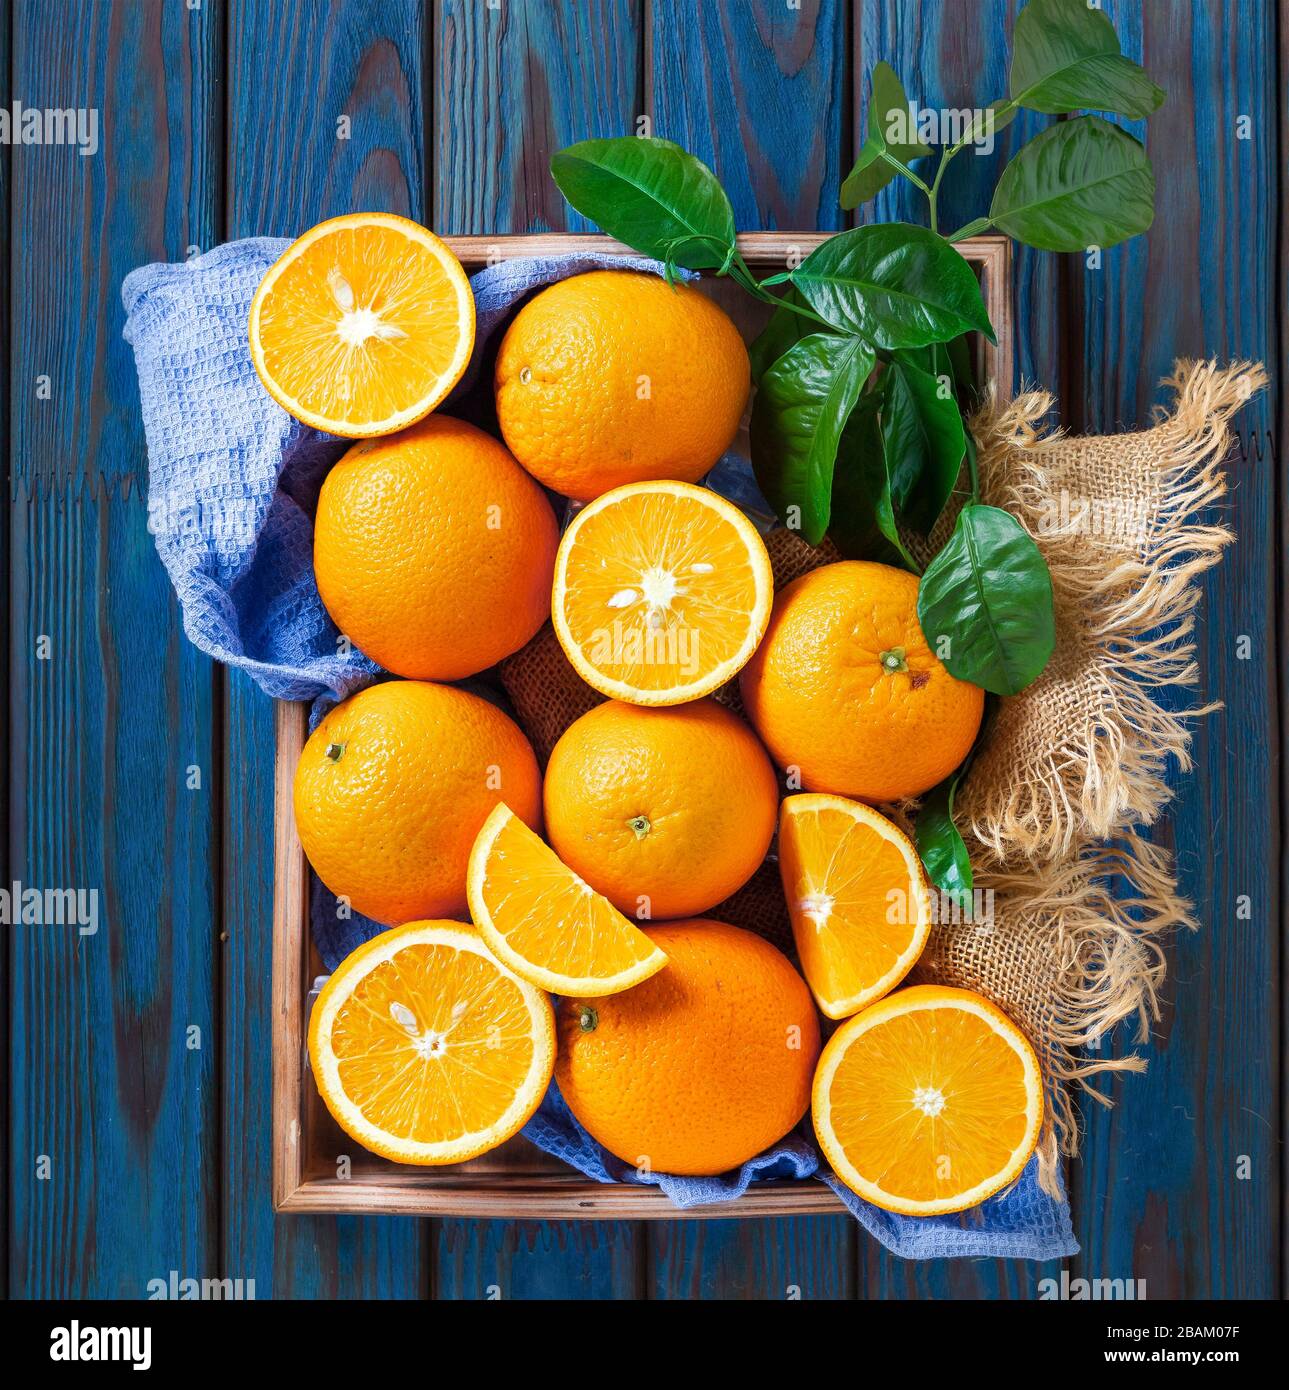 mandarino biologico, arance mandarini, clementine arance, arance fresche, arance  fresche, arance fresche, materie prime organiche Foto stock - Alamy